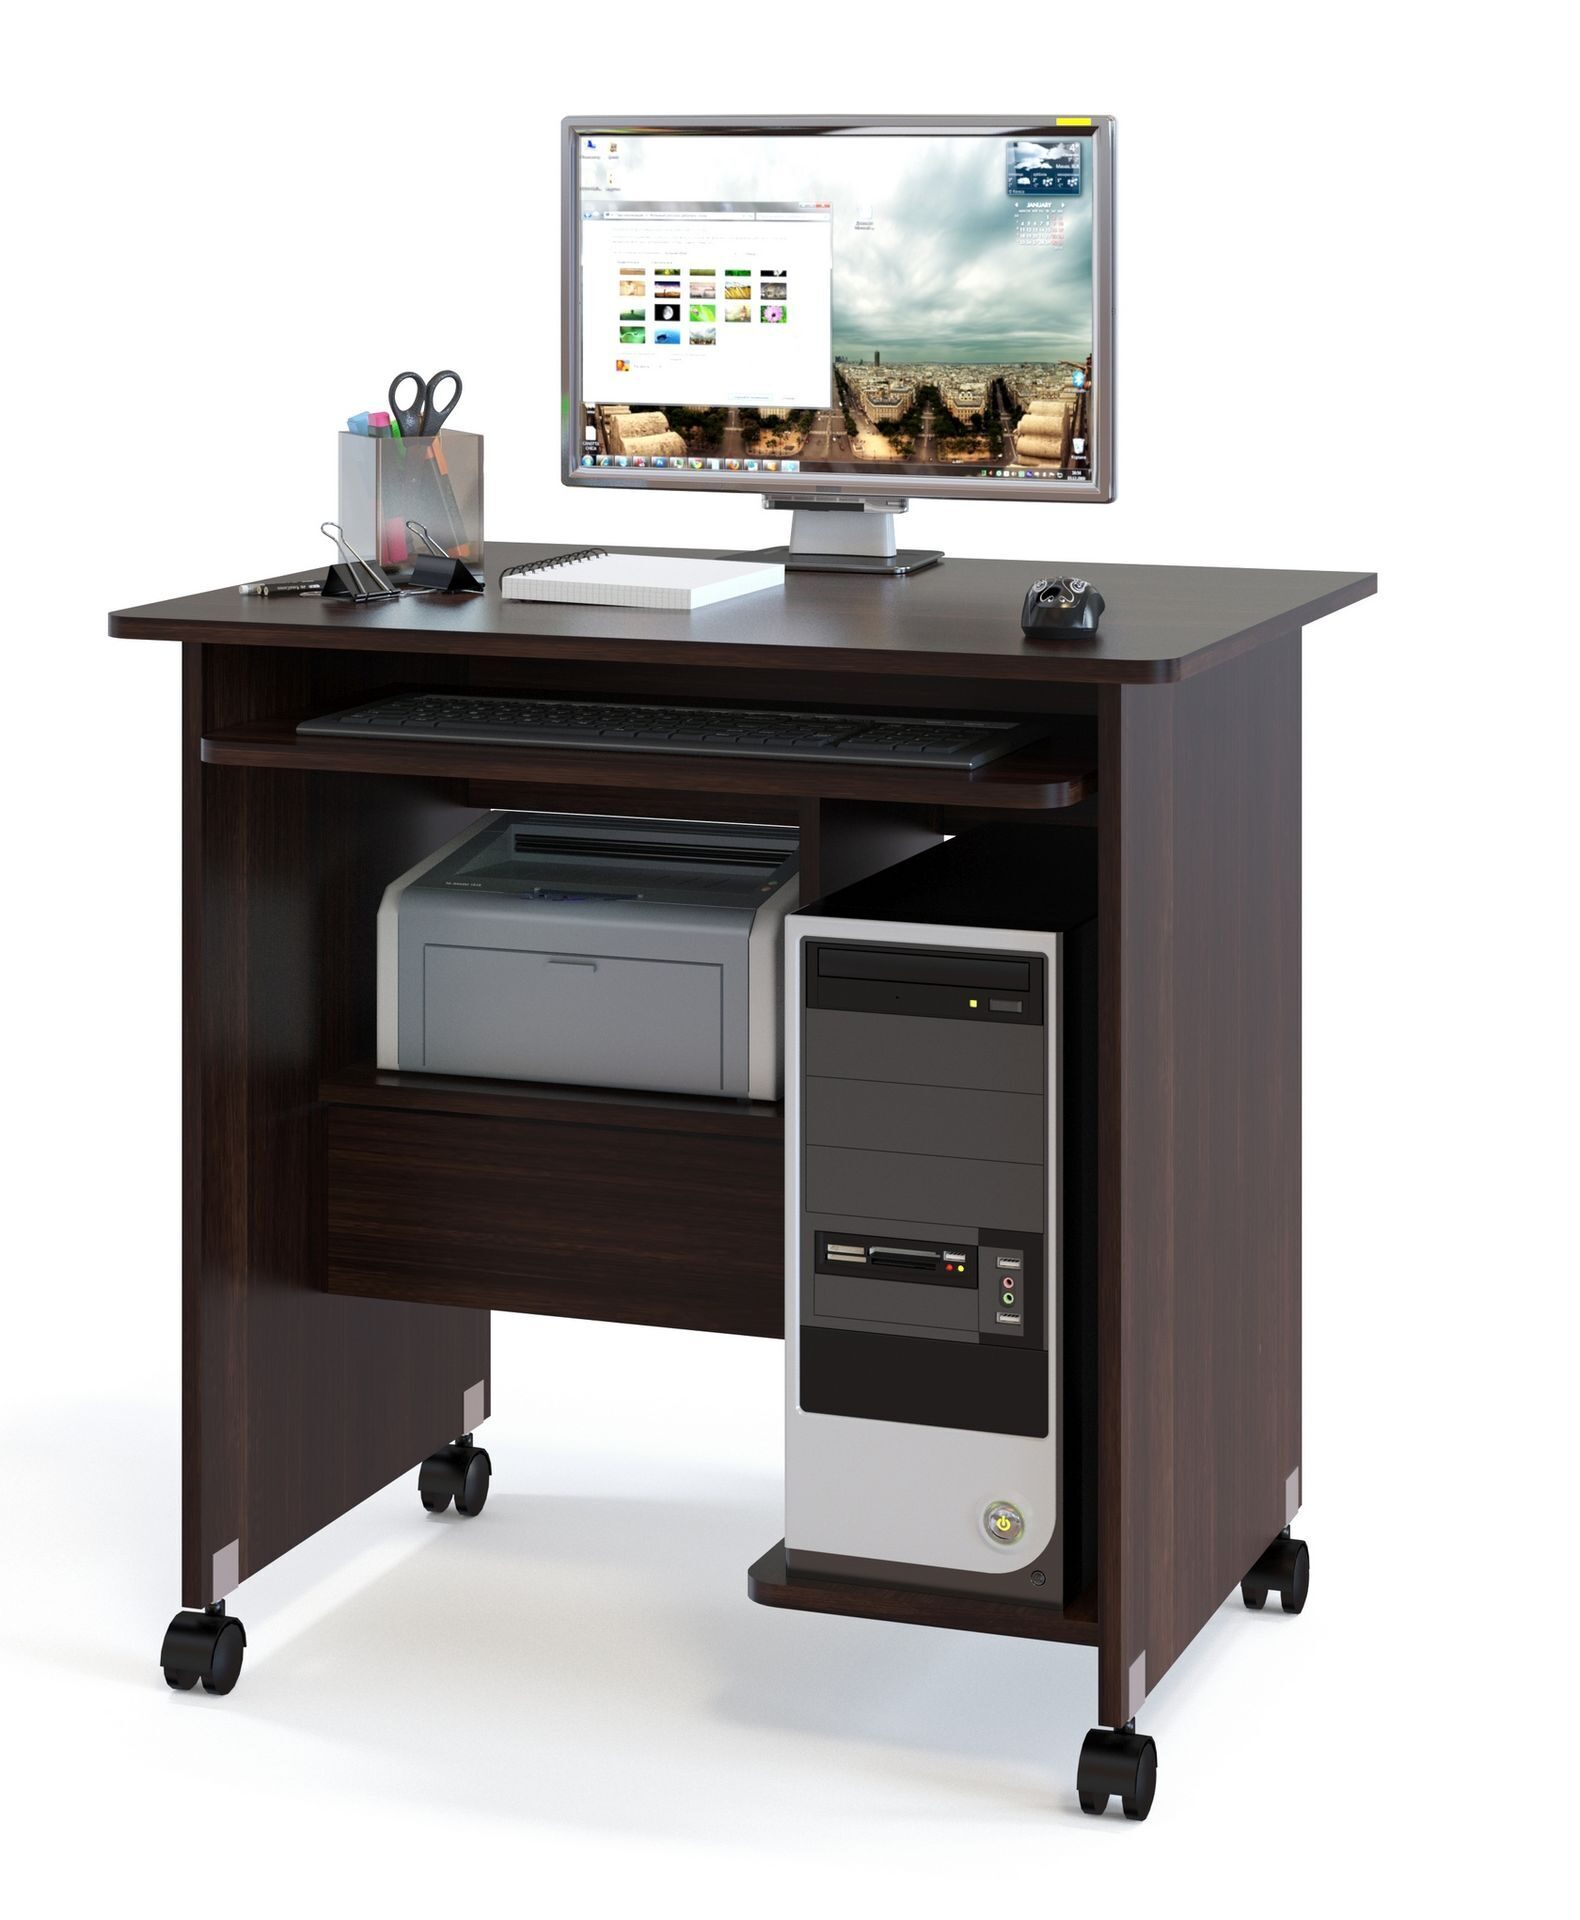 Компьютерный стол Сокол КСТ-10.1